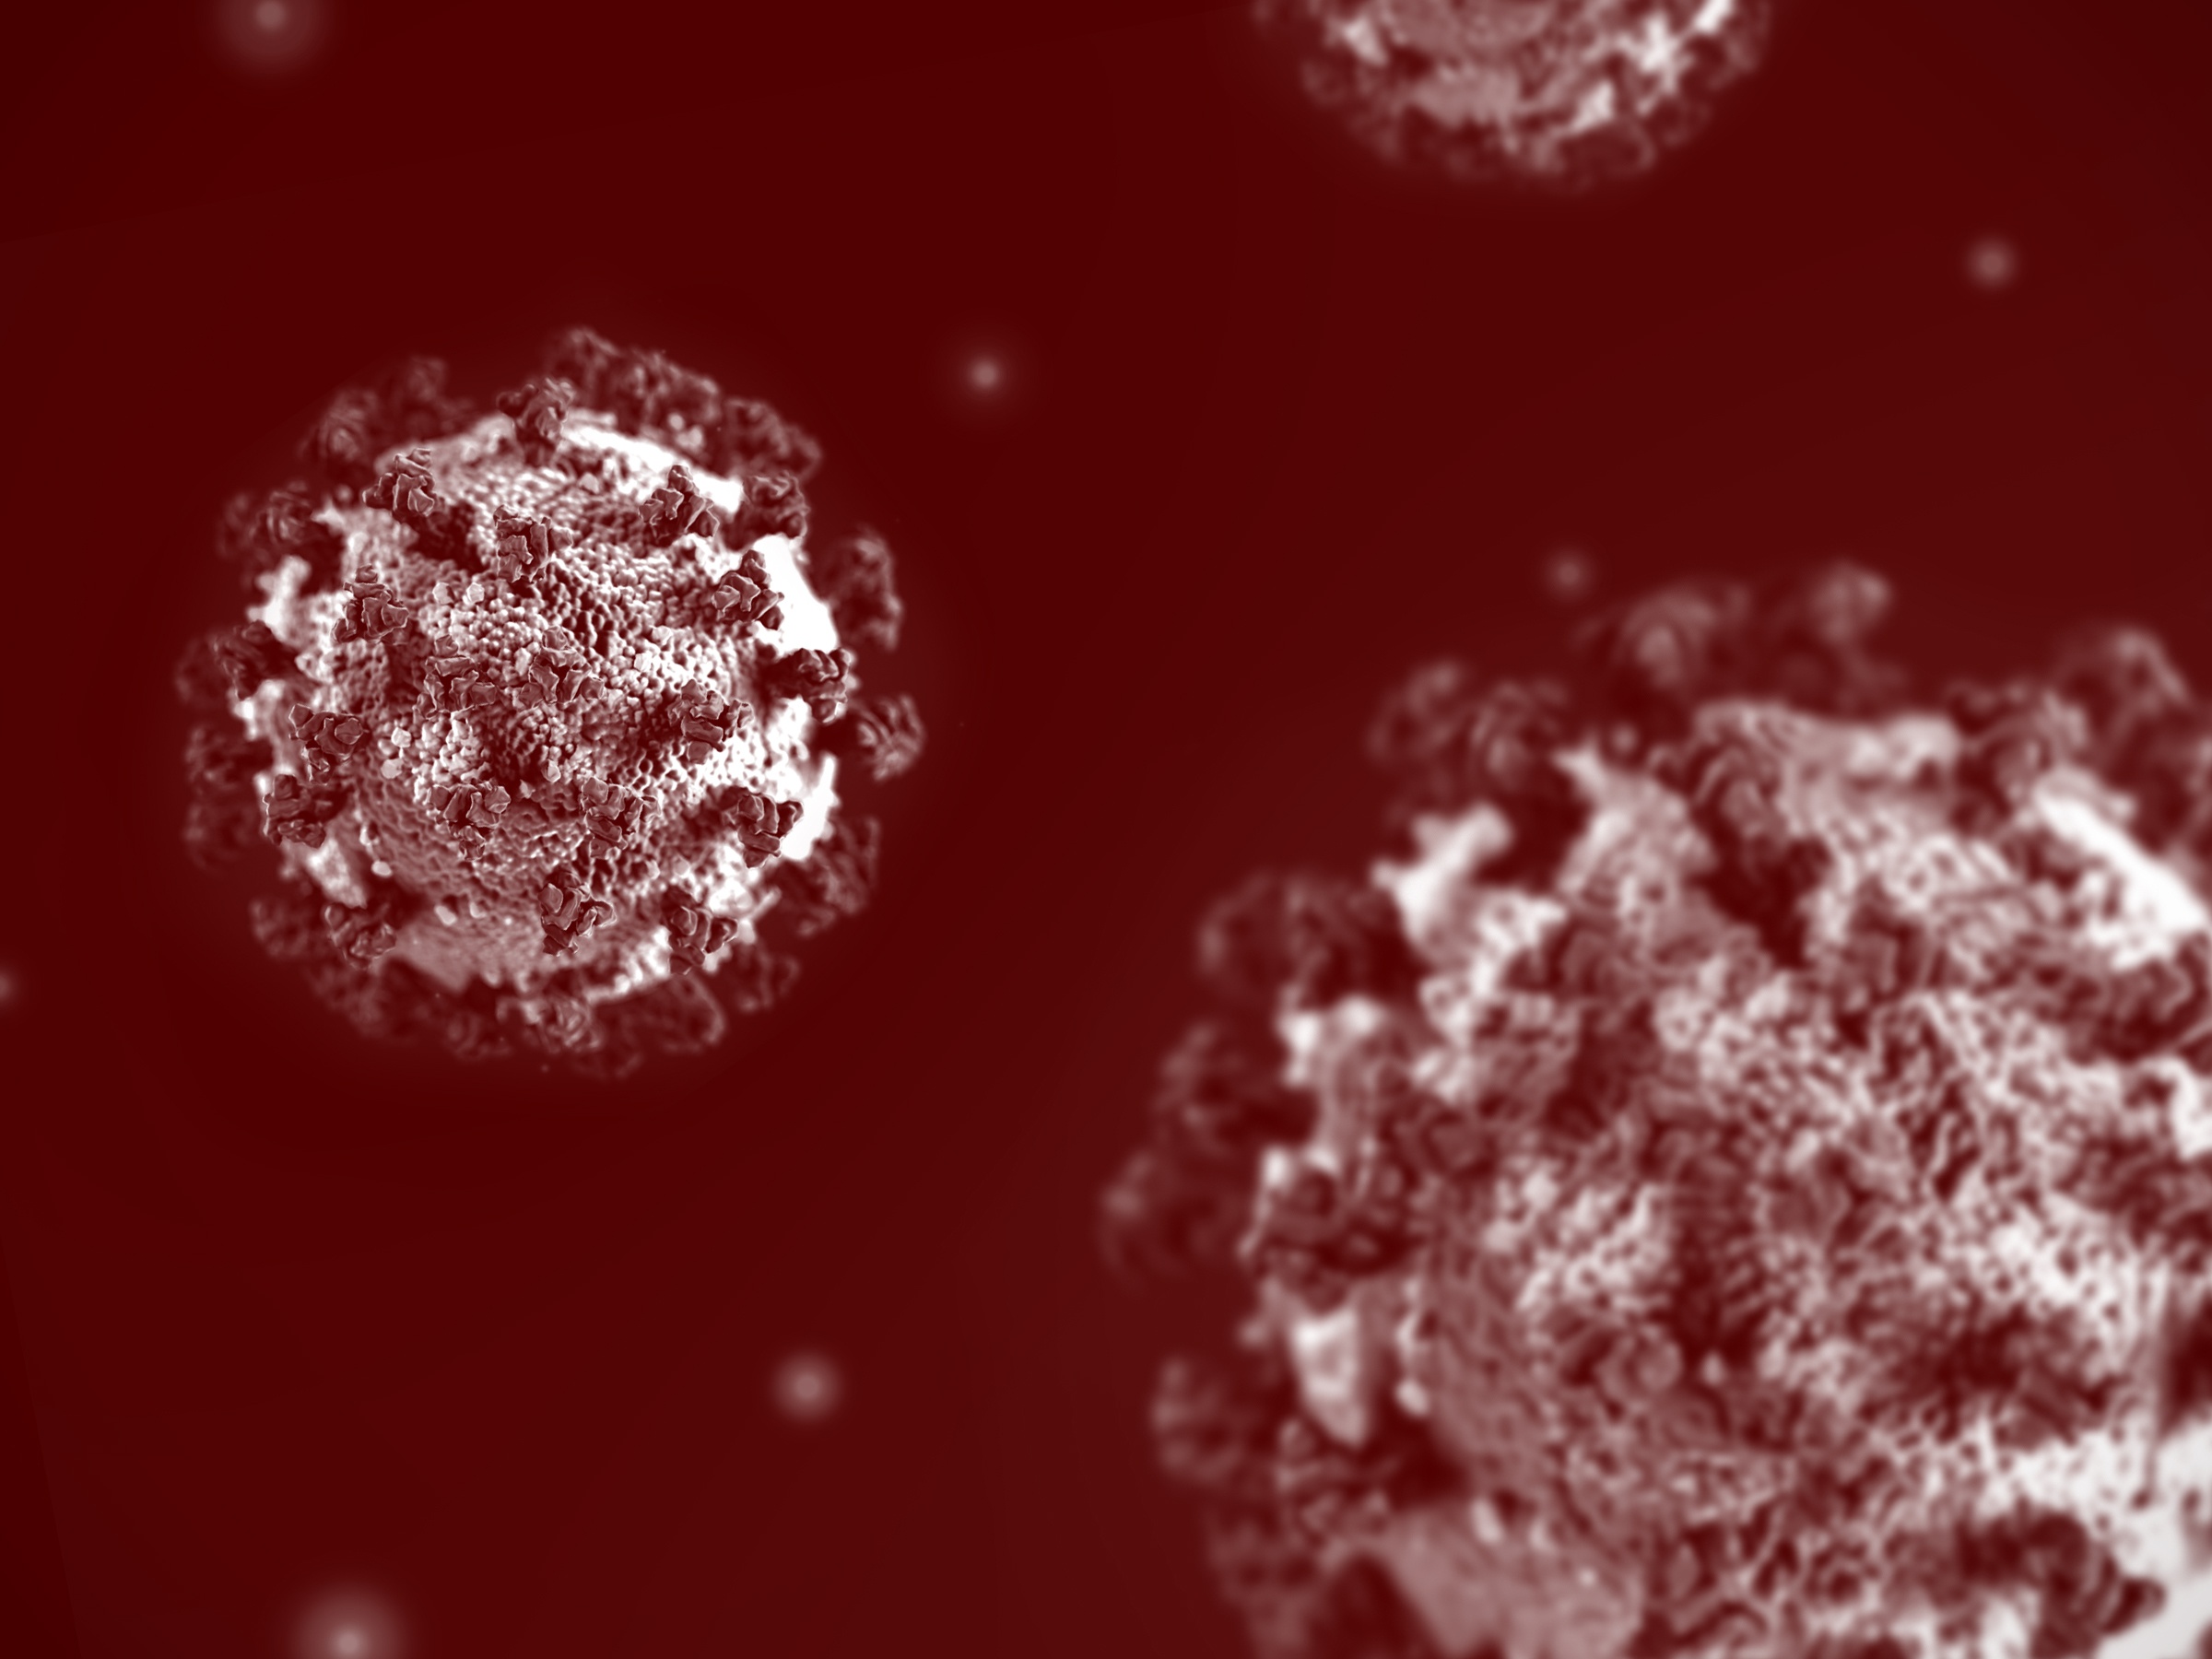 maroon and white art based on image of coronavirus